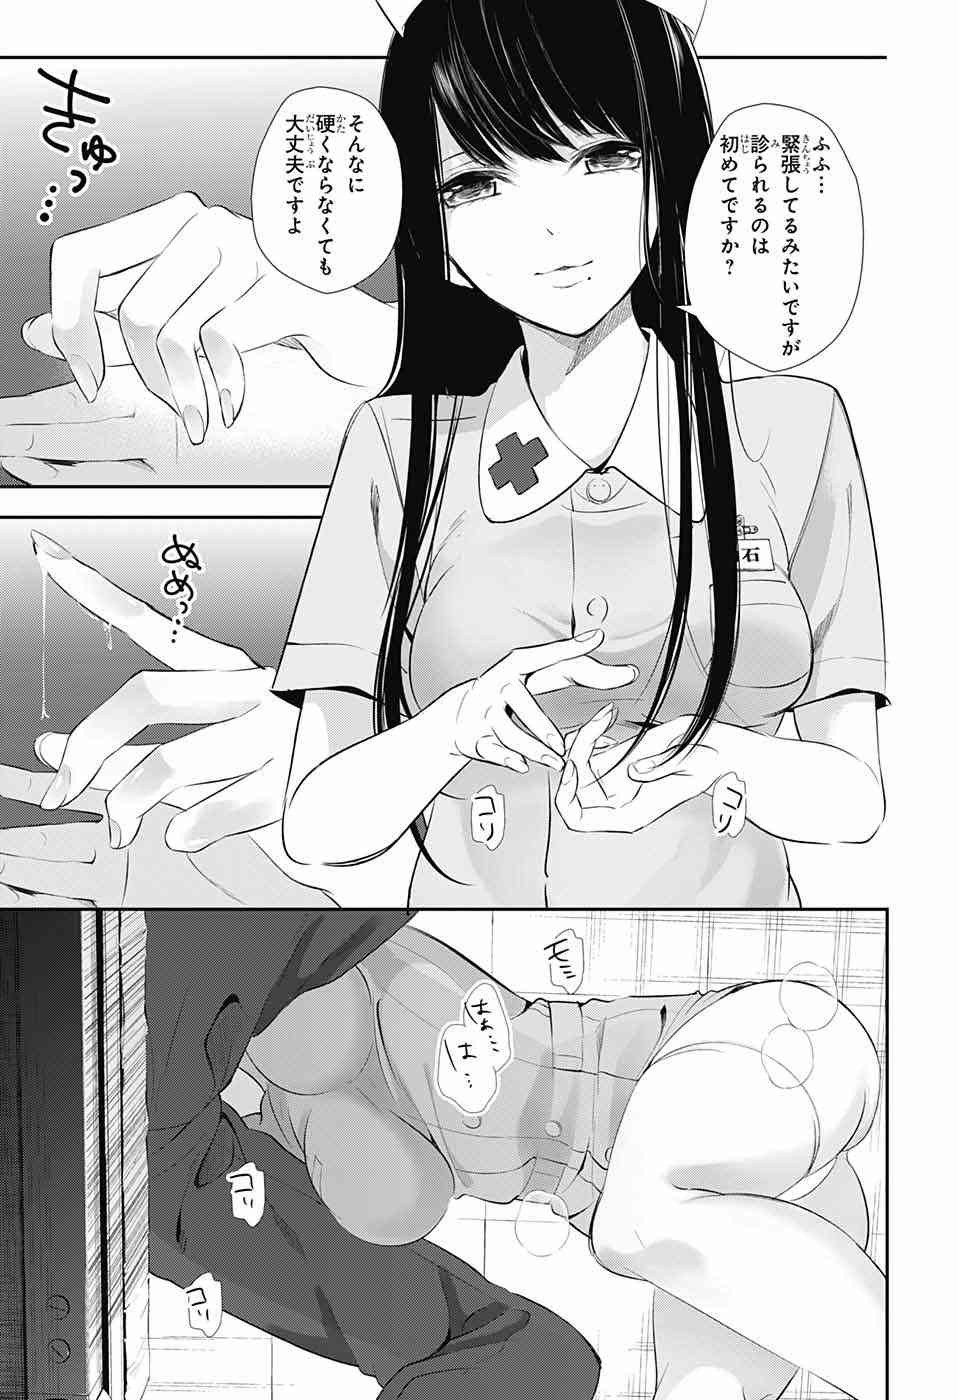 Wonder Rabbit Girl - Chapter 17 - Page 4